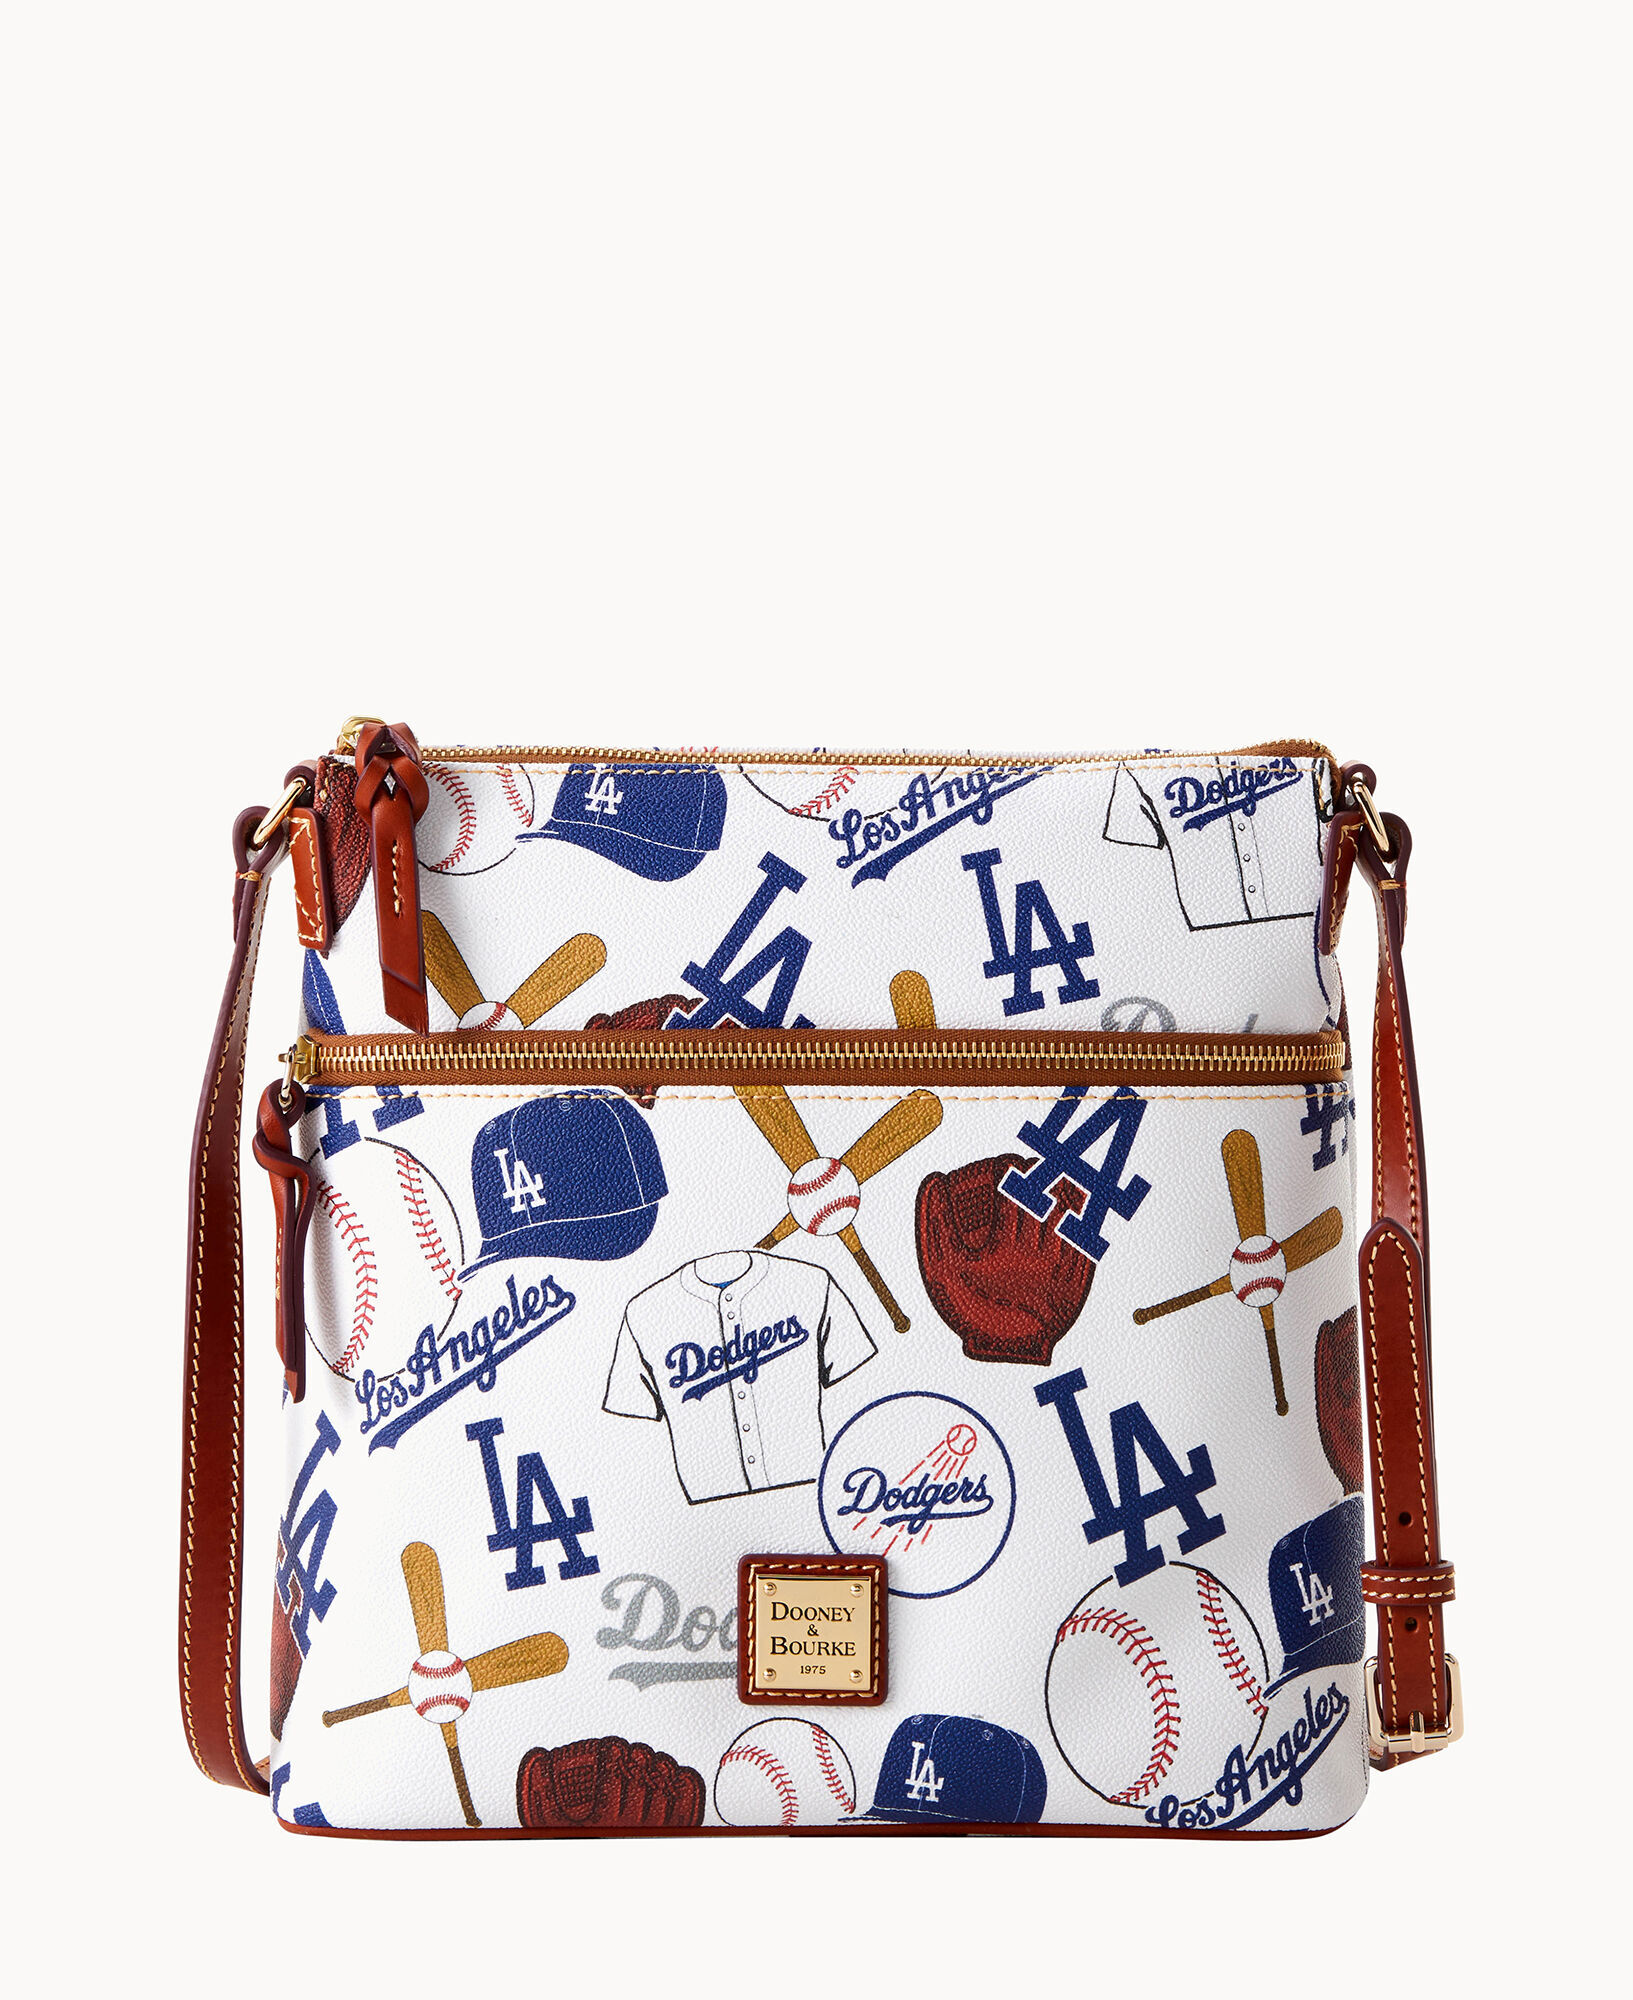 Los Angeles Dodgers Dooney & Bourke Sporty Monogram Continental Clutch